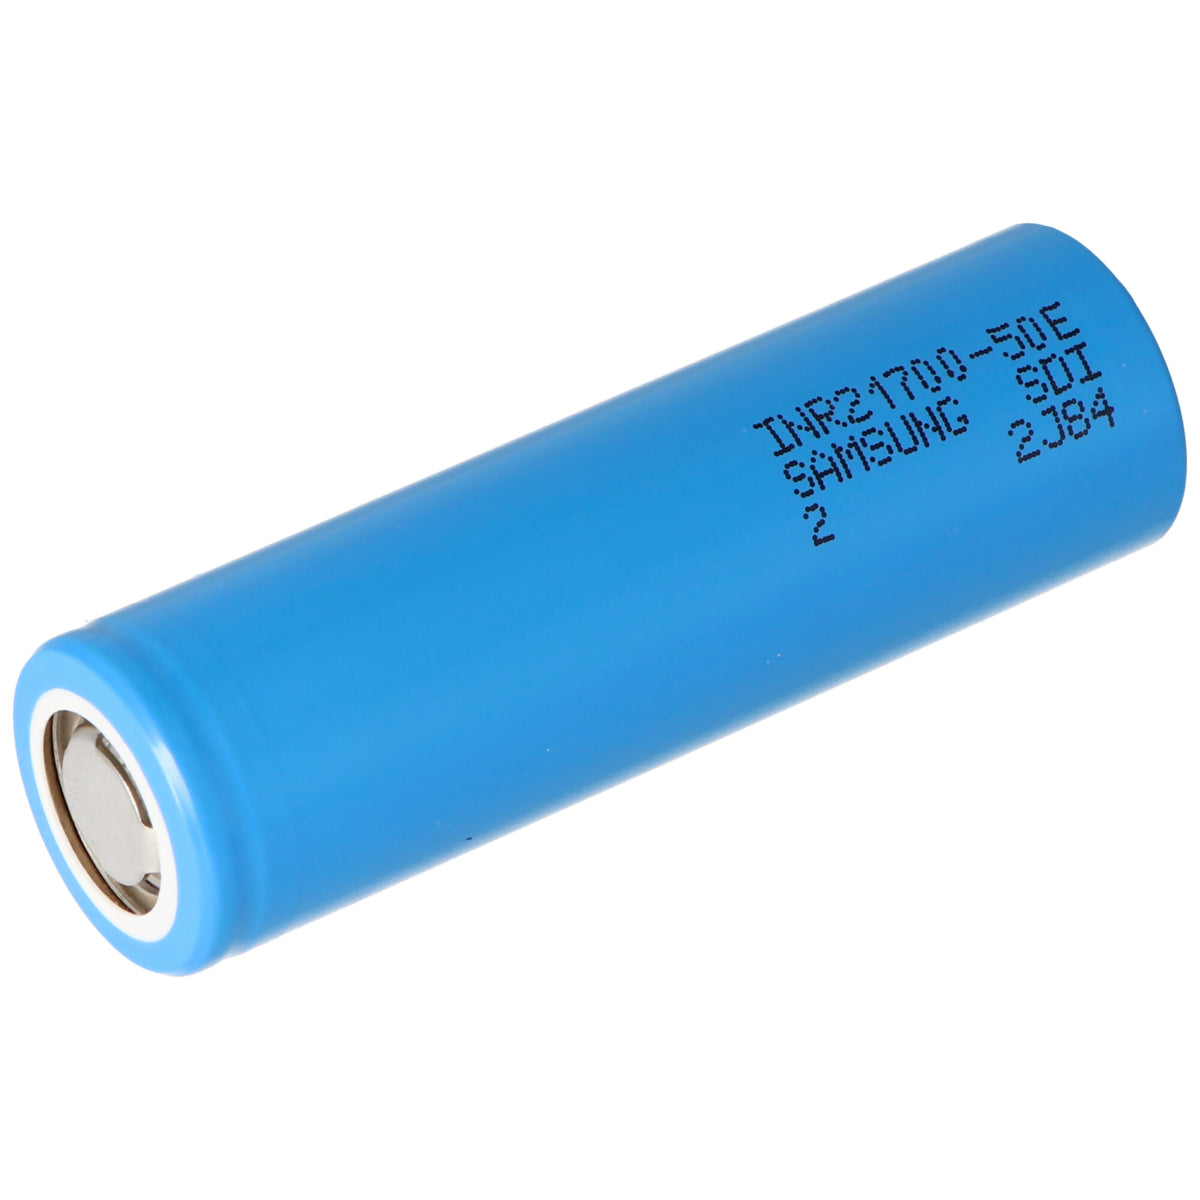 Samsung 50E 21700 FLAT TOP Li-ion battery